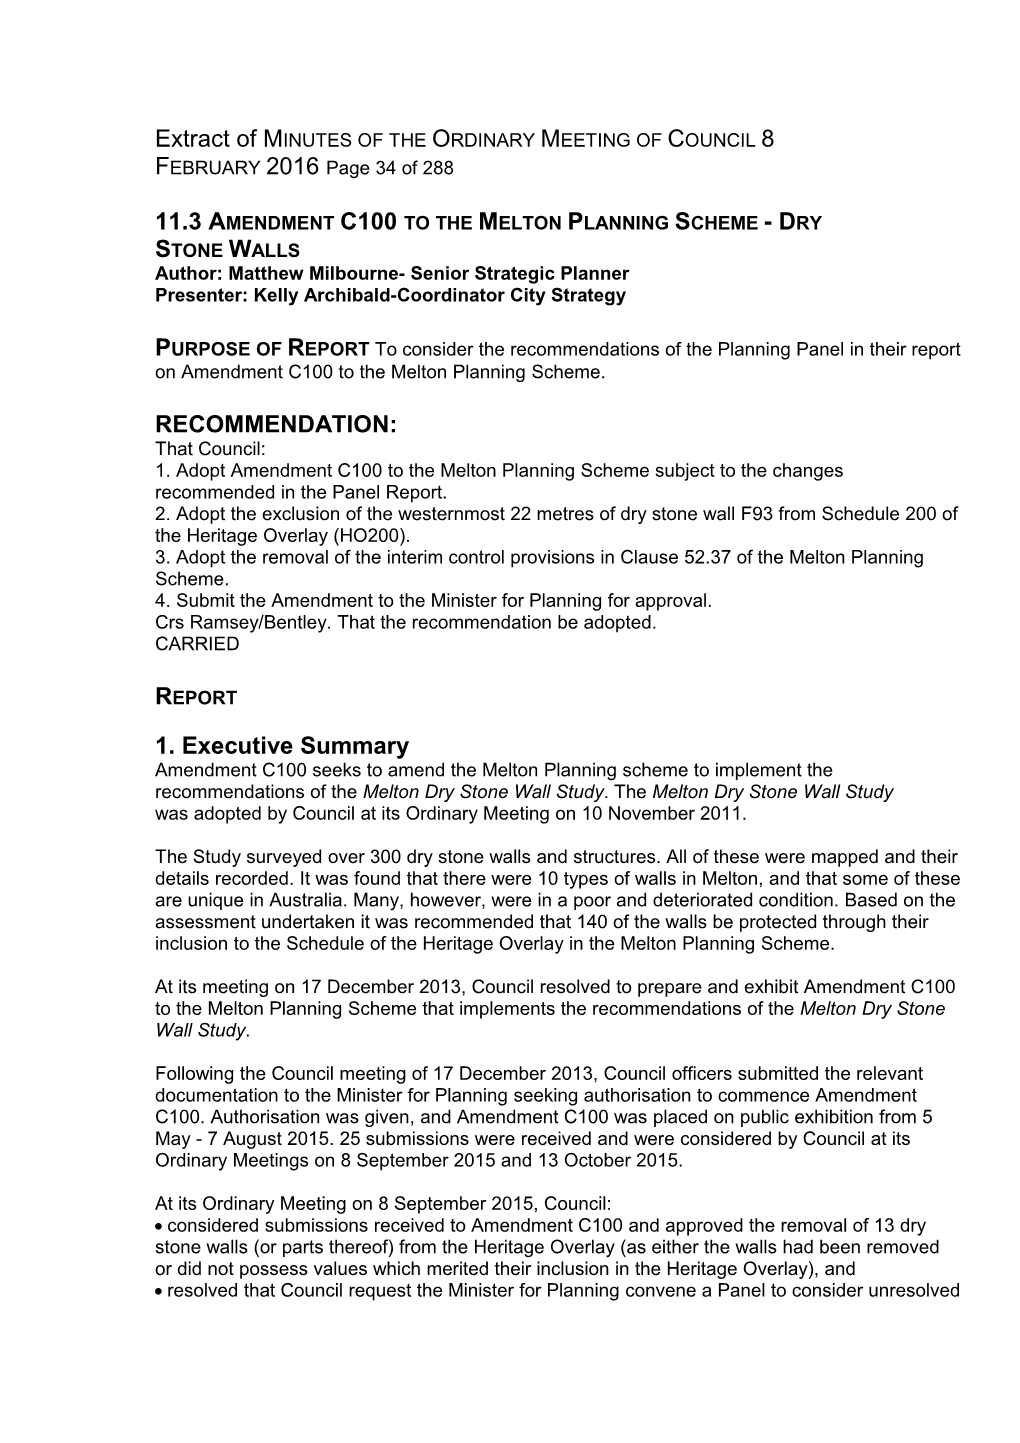 11.3 Amendment C100 to the Melton Planning Scheme - Dry Stone Walls